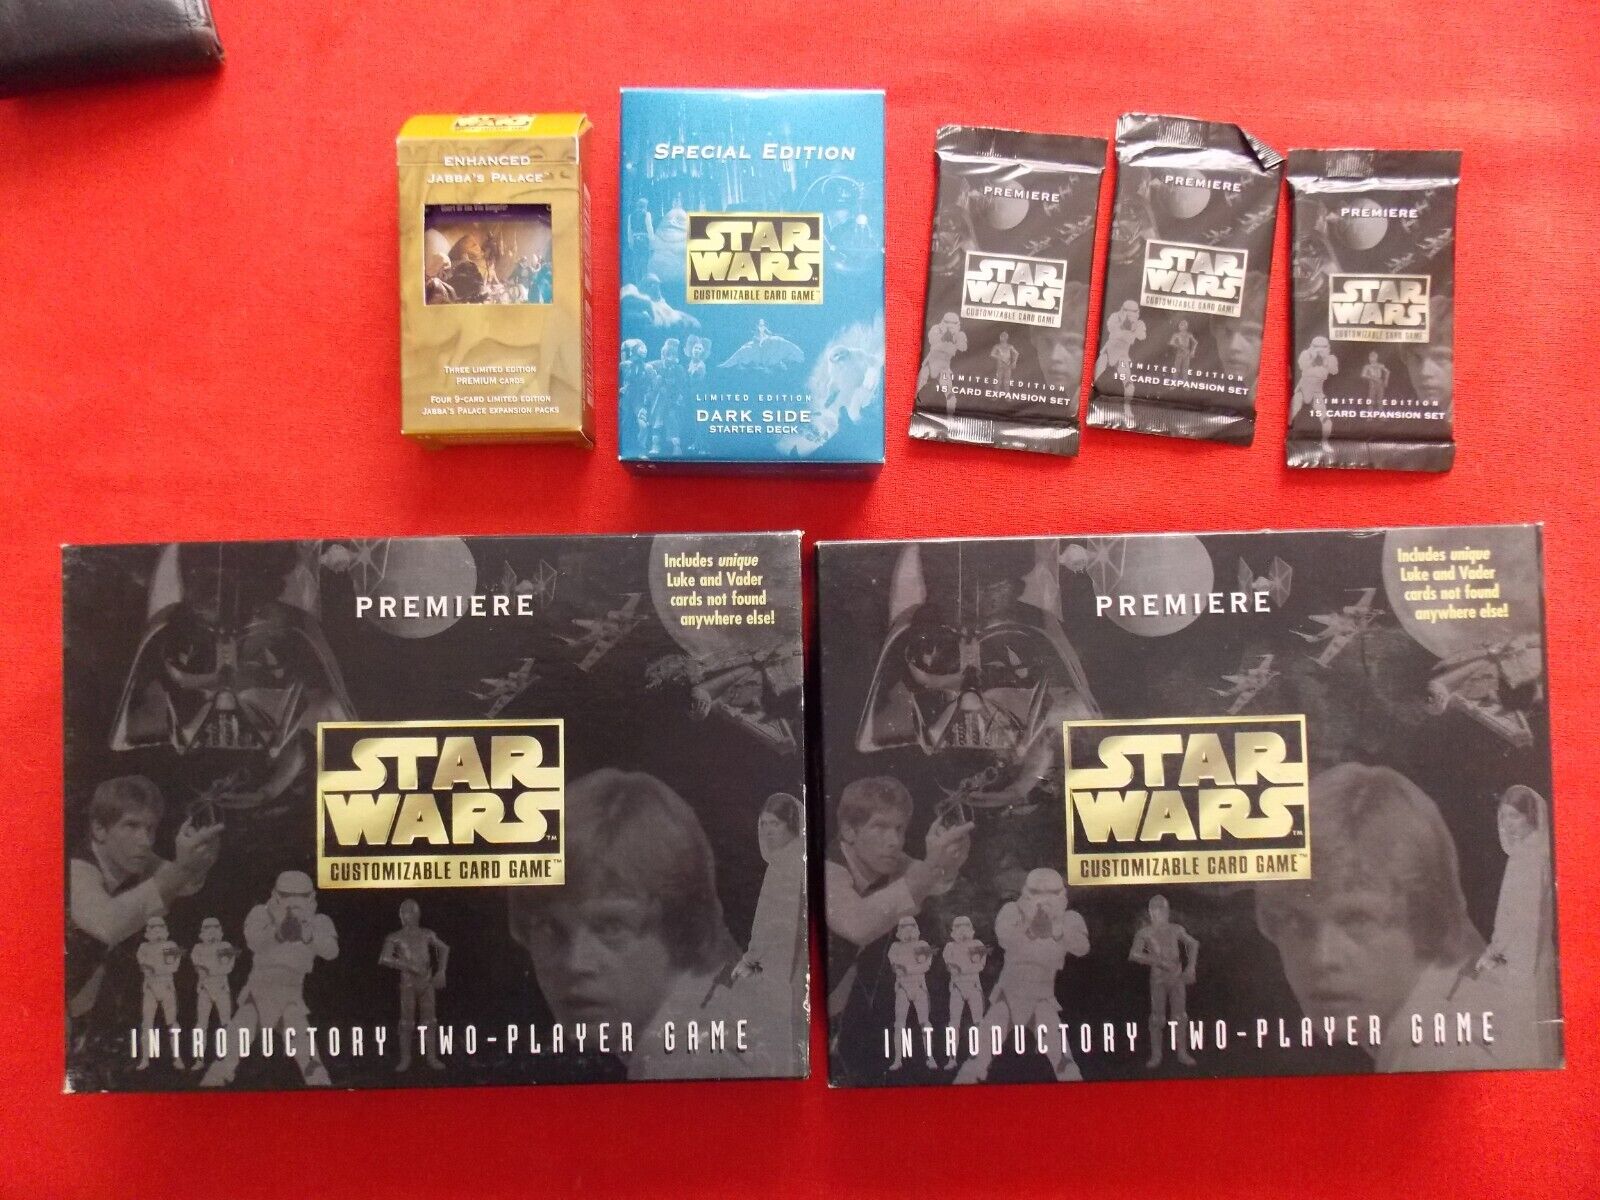 Star Wars 2 Customizable Card Games with Dark Side Starter Deck & Jabbas Palace